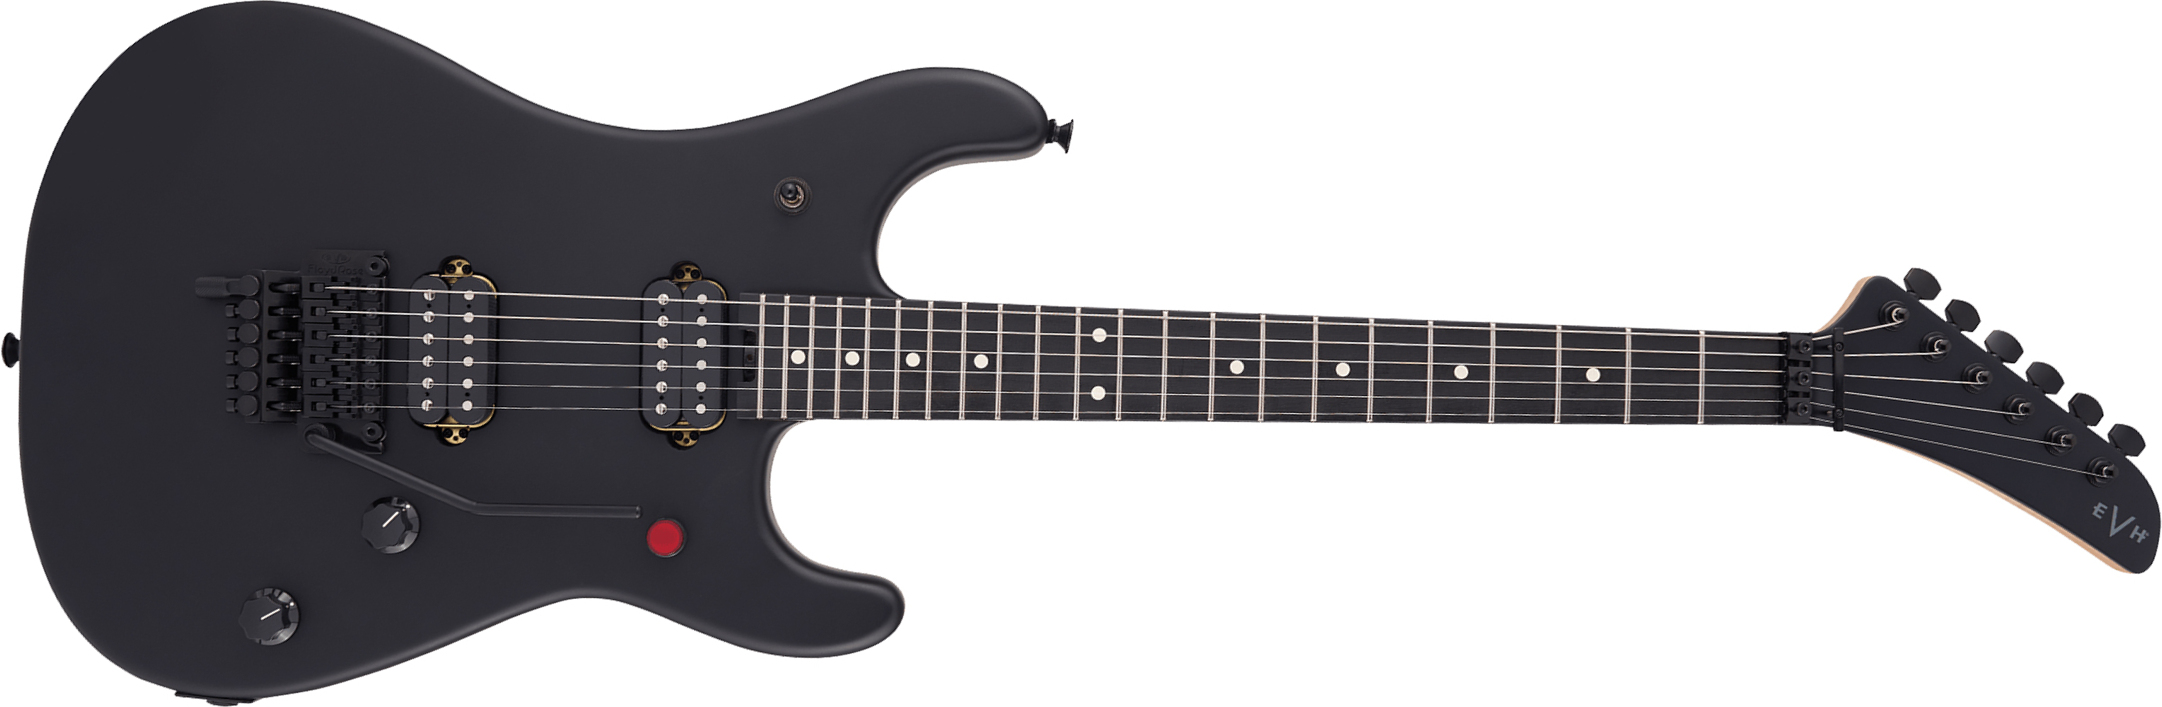 Evh 5150 Standard Mex 2h Fr Eb - Stealth Black - Str shape electric guitar - Main picture